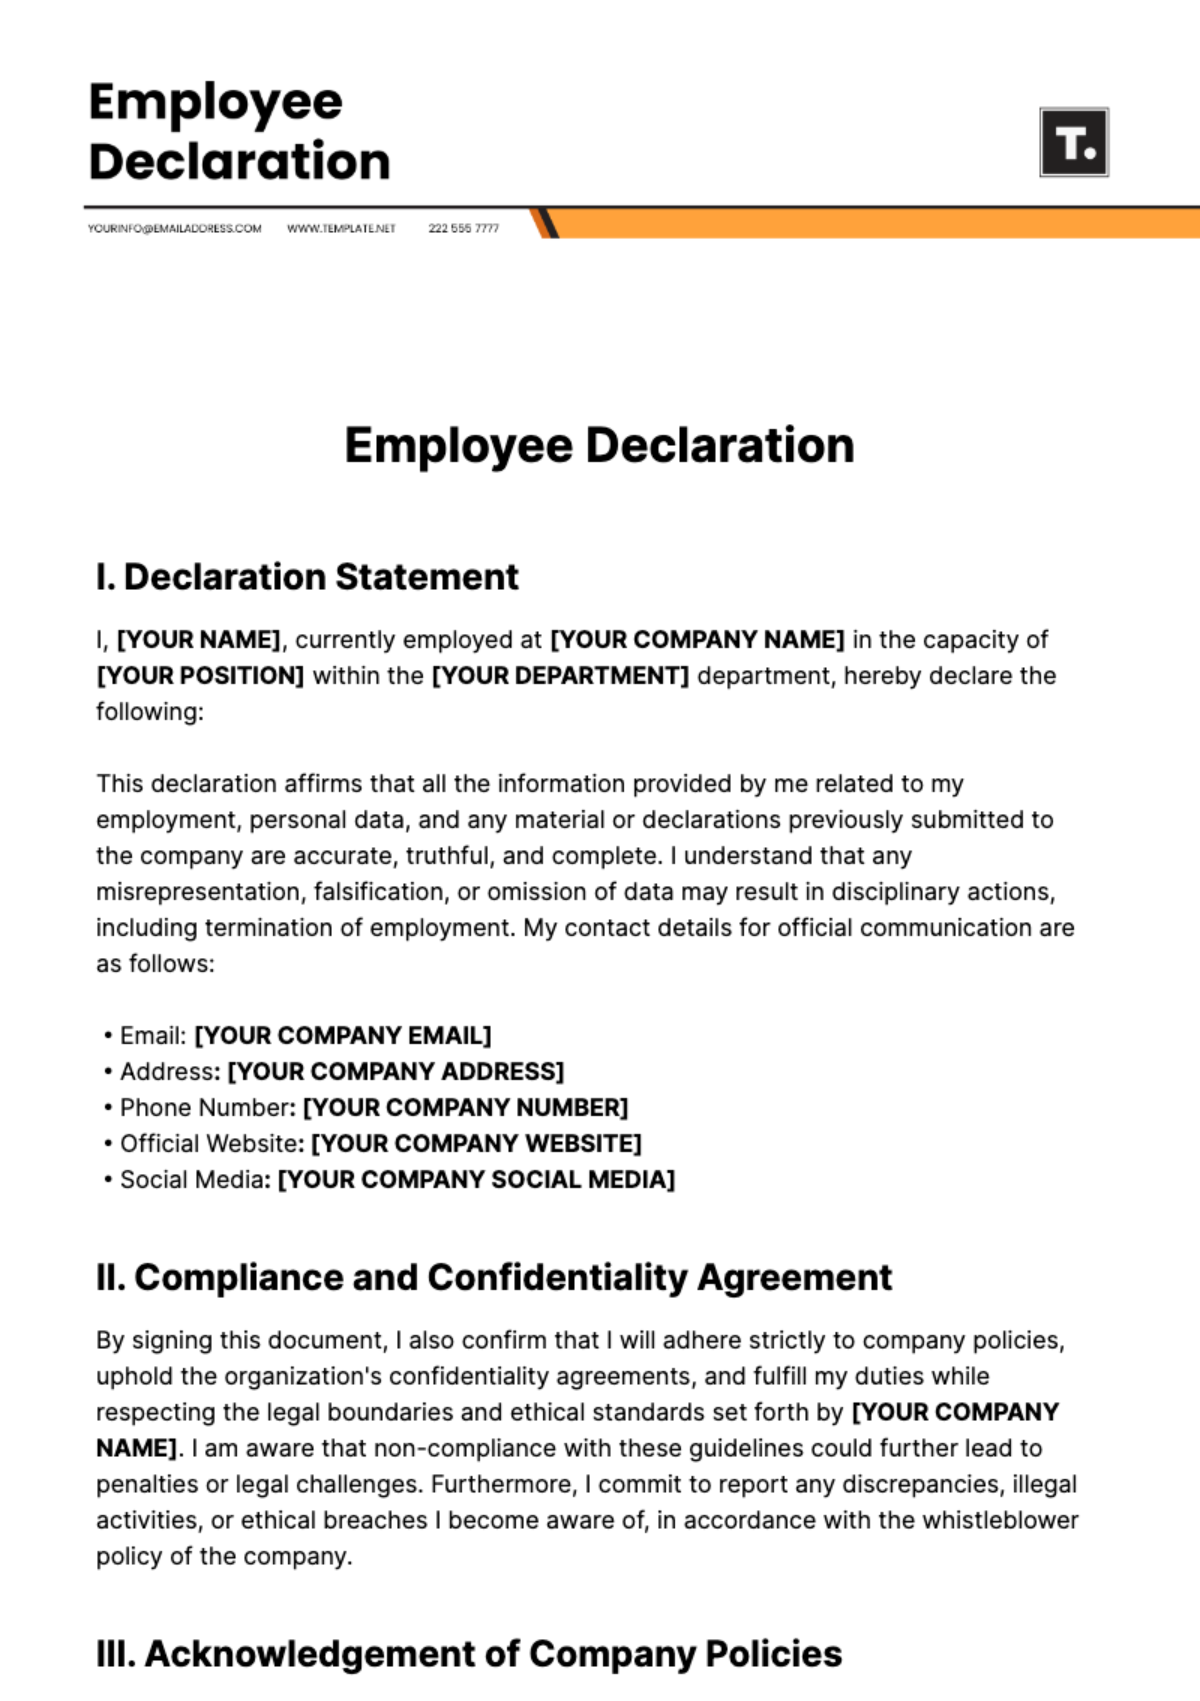 Employee Declaration Template